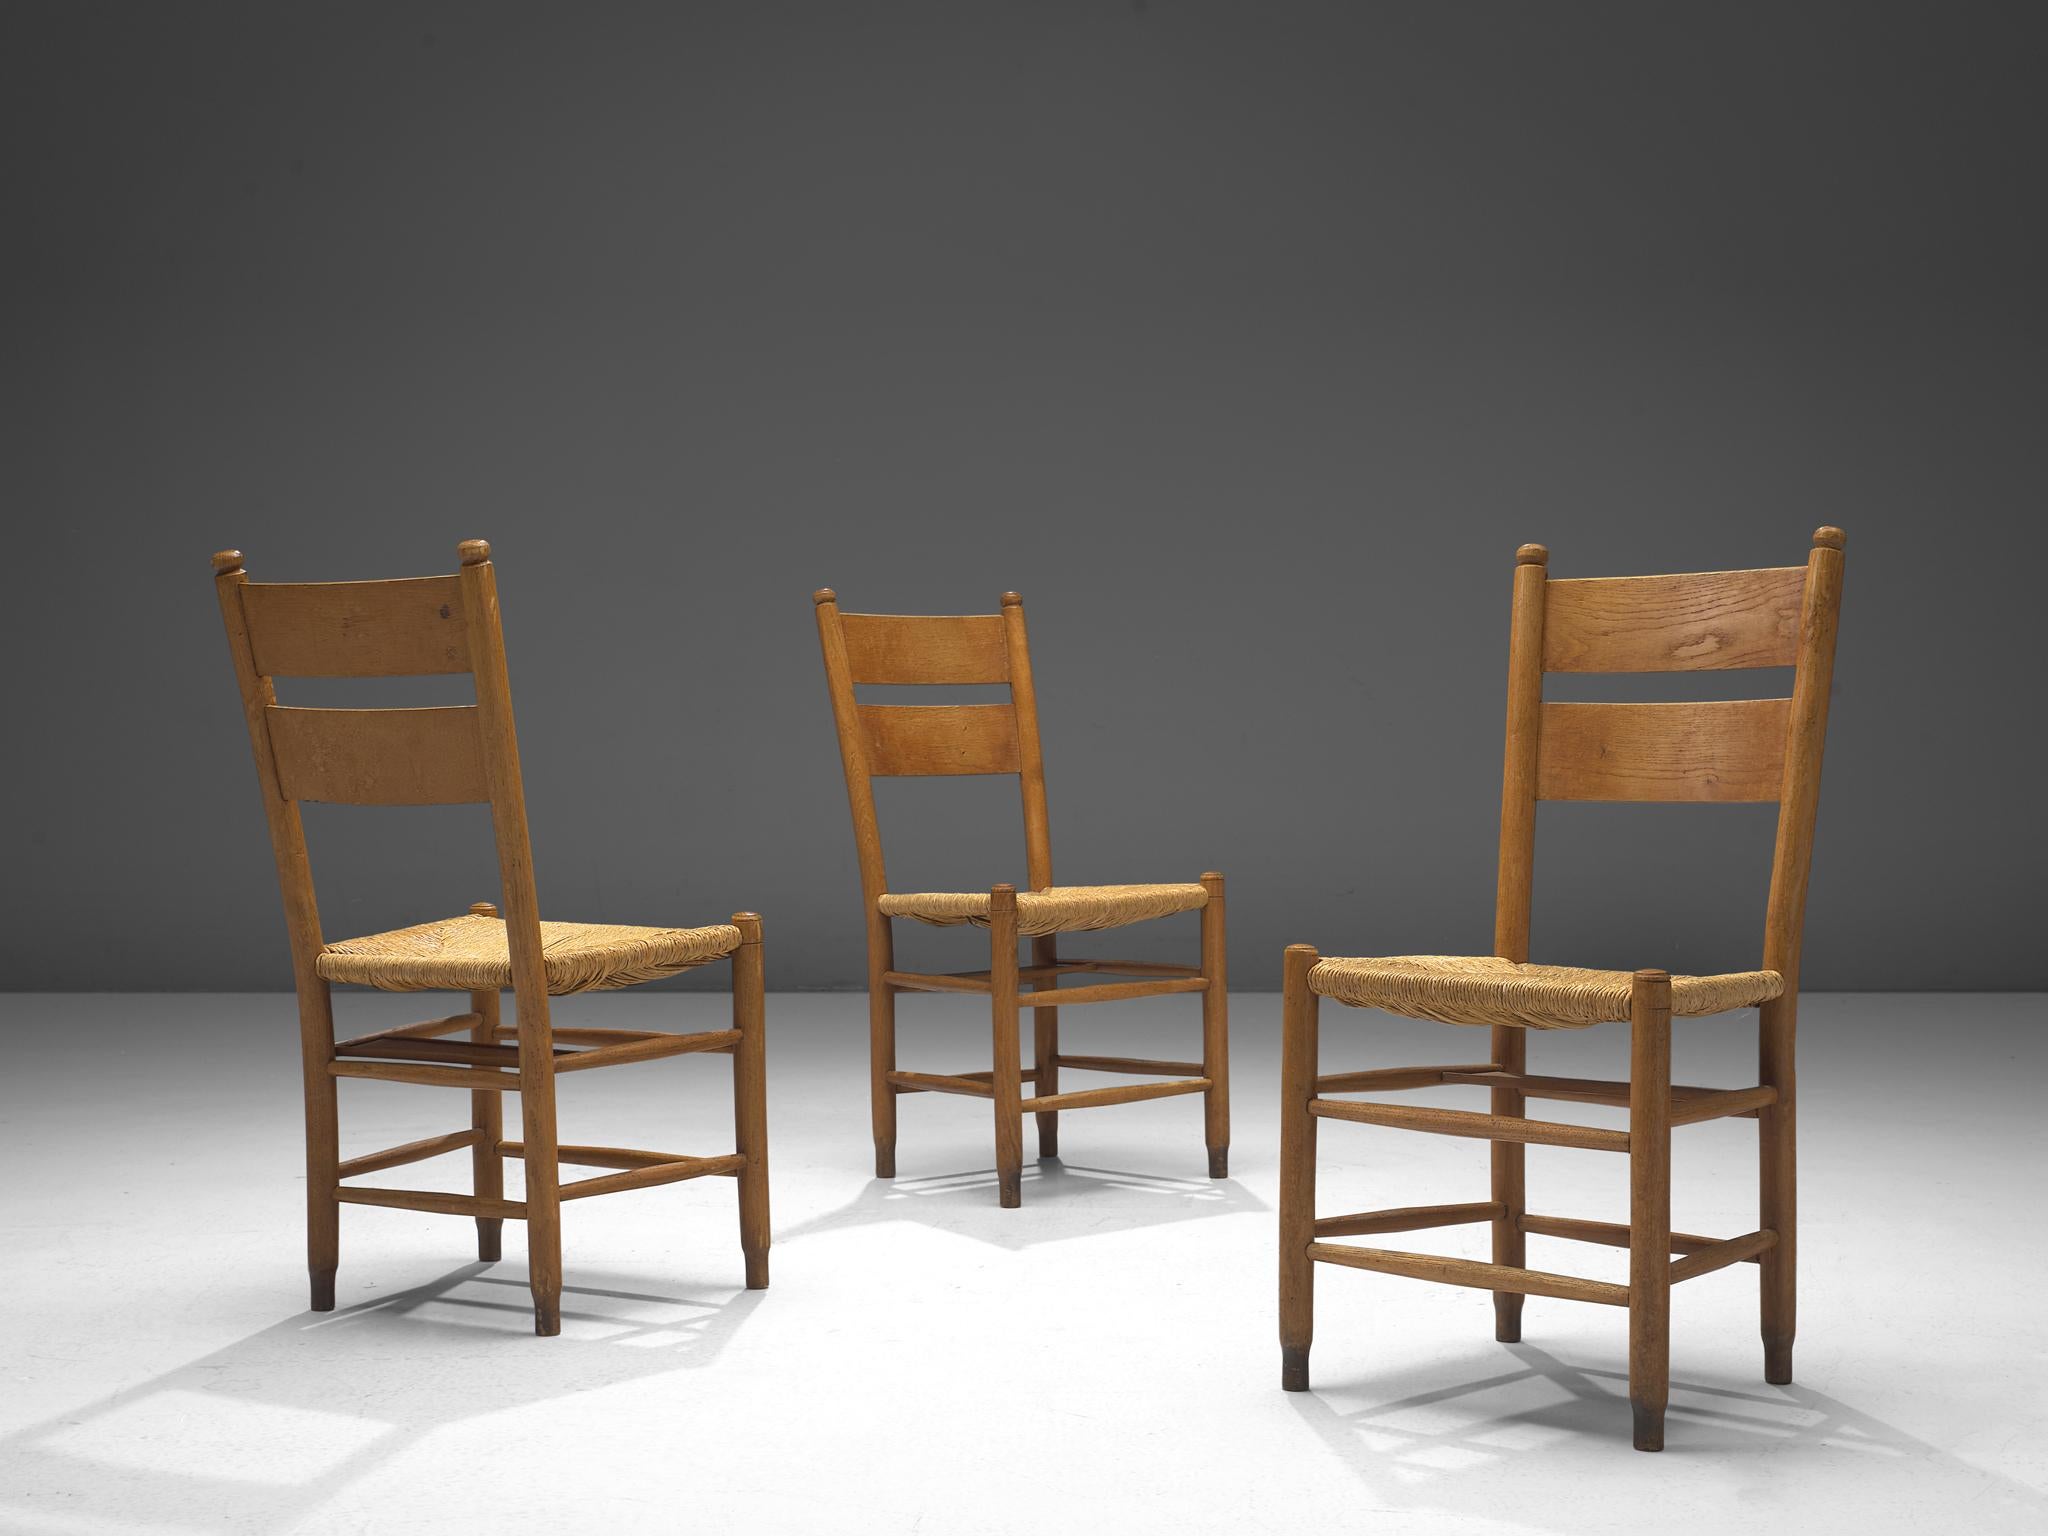 Scandinavian Modern Rustic Danish Chairs in Straw and Oak For Sale